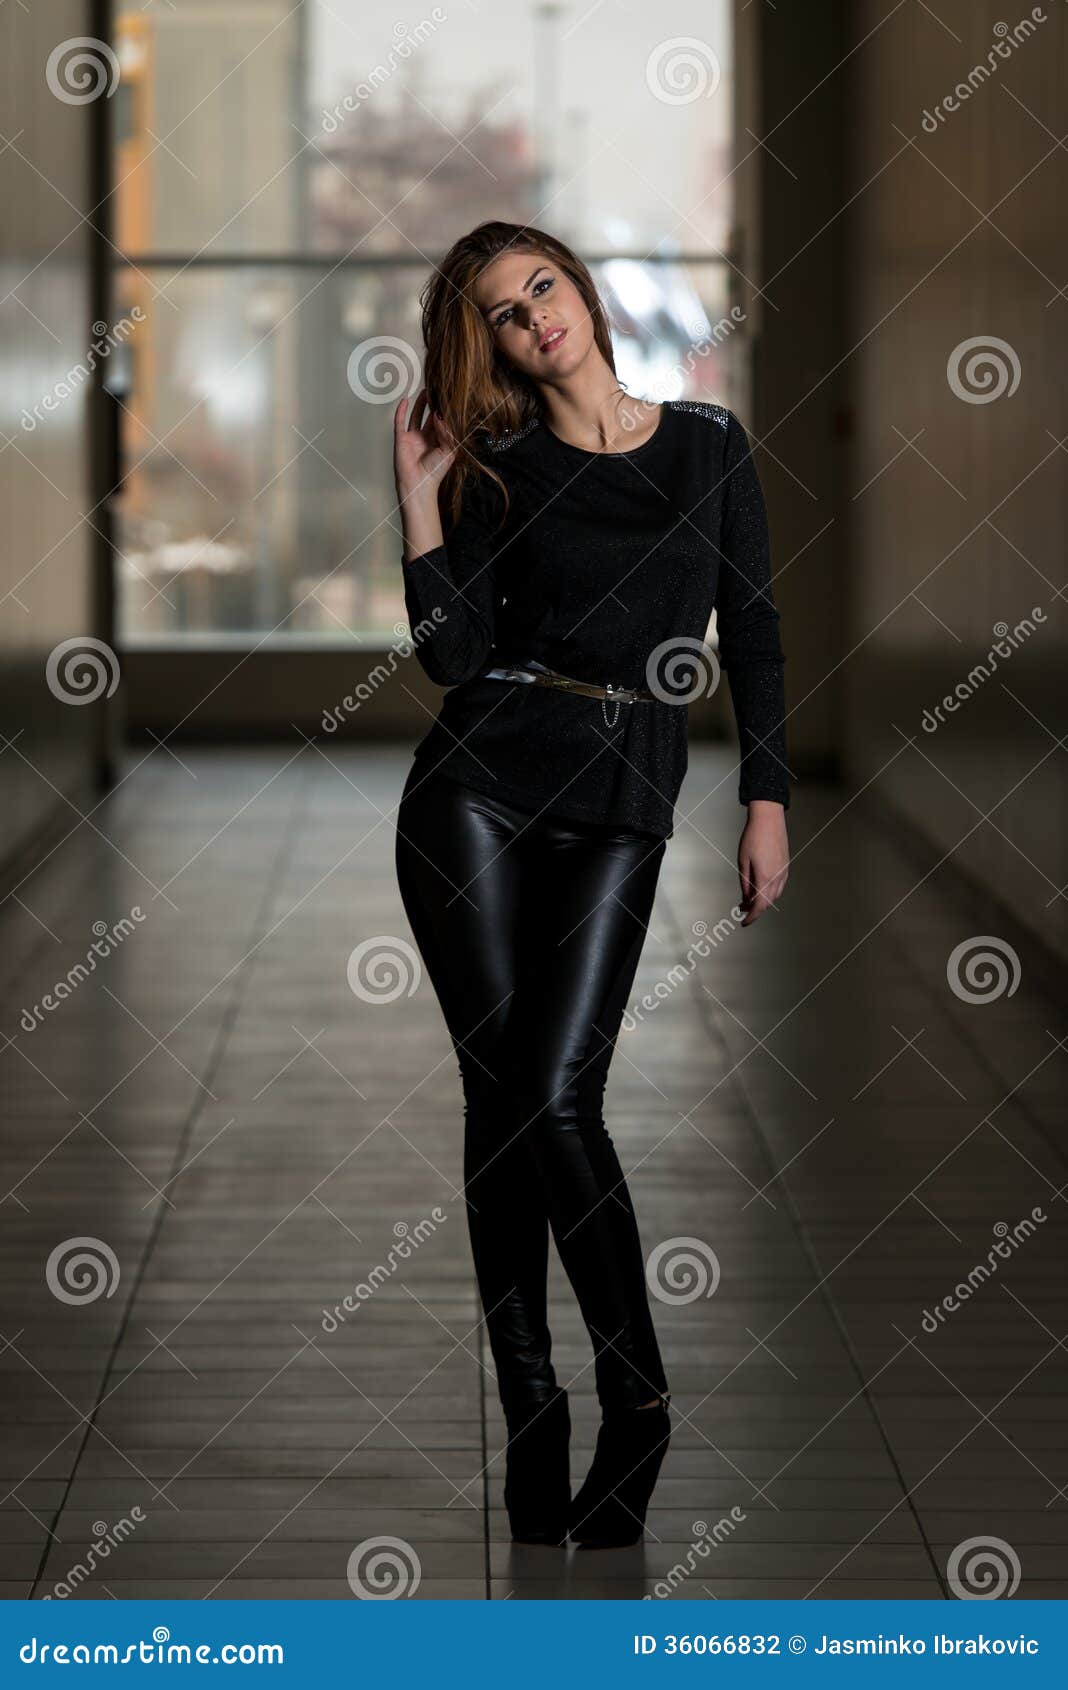 Fashion Girl Wearing Leather Pants and Long Sleeve Stock Photo - Image ...